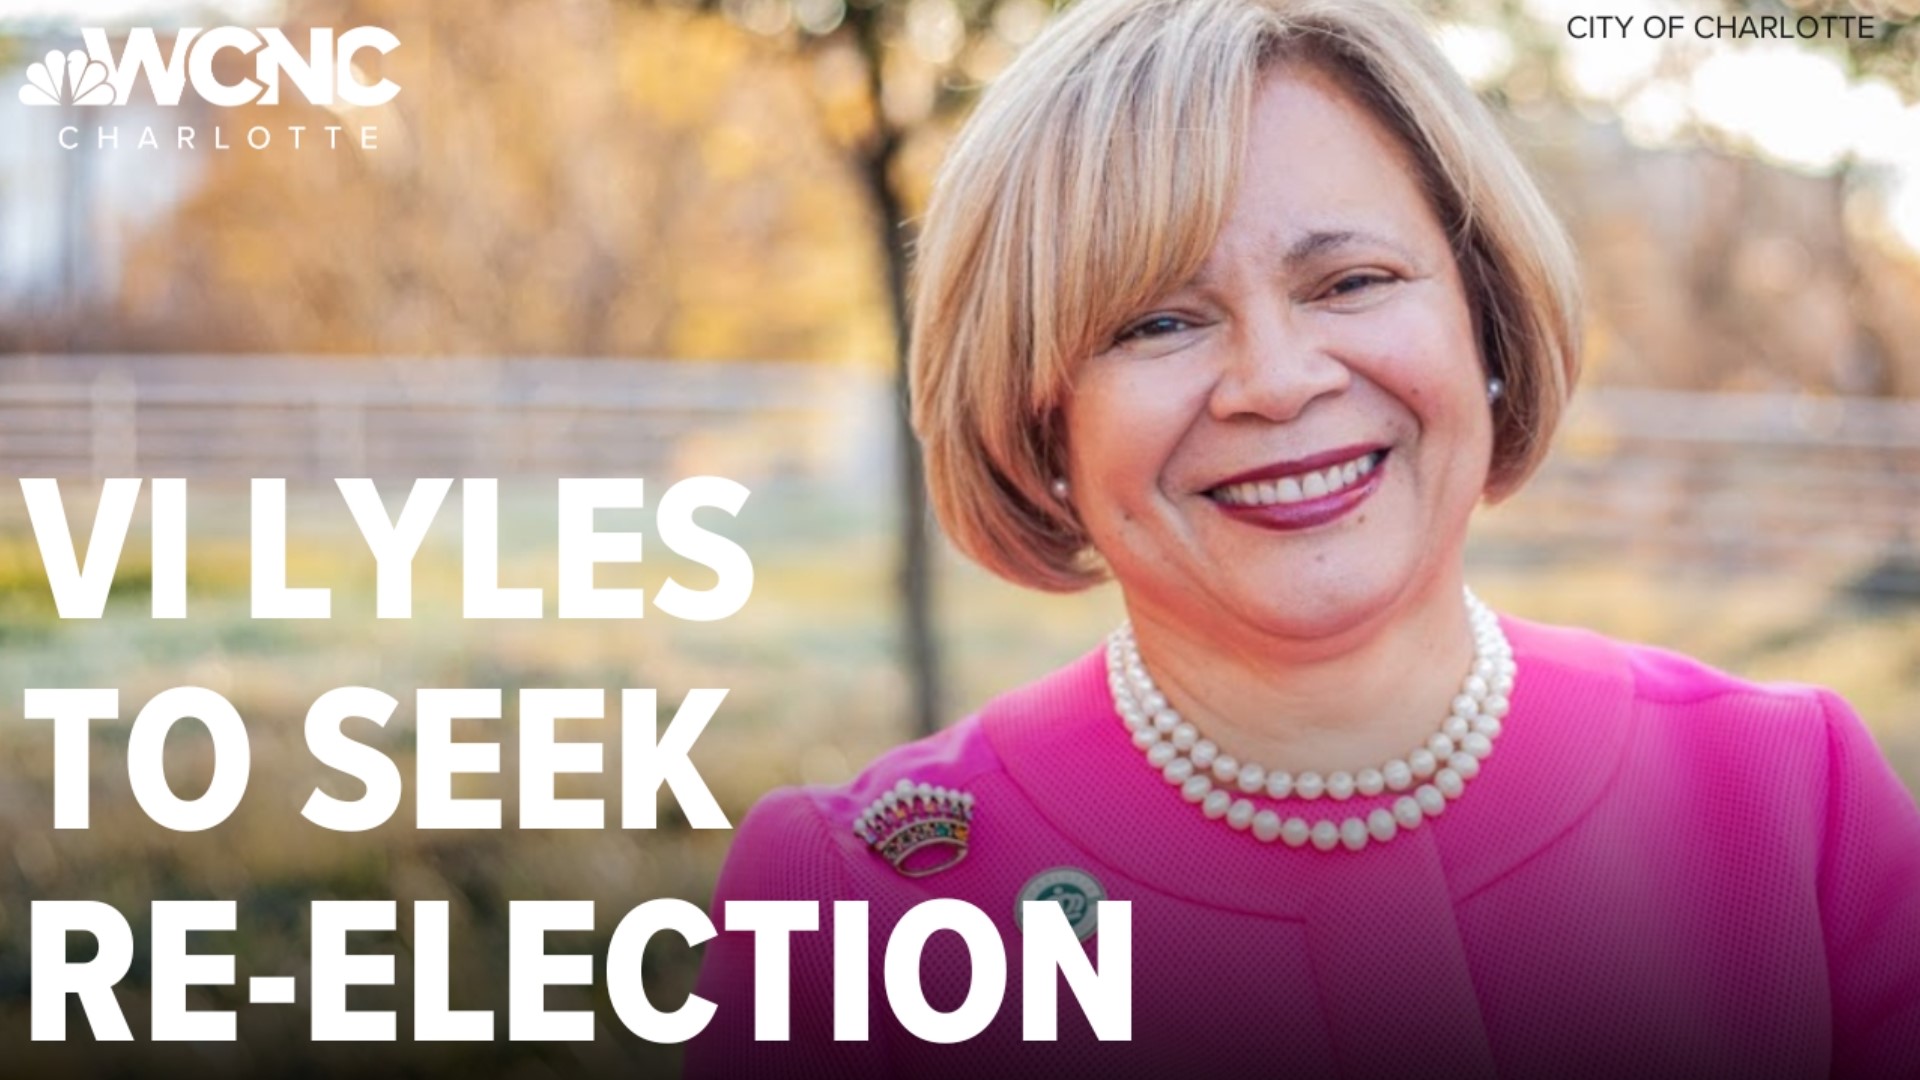 Vi Lyles announces reelection campaign for Charlotte mayor.